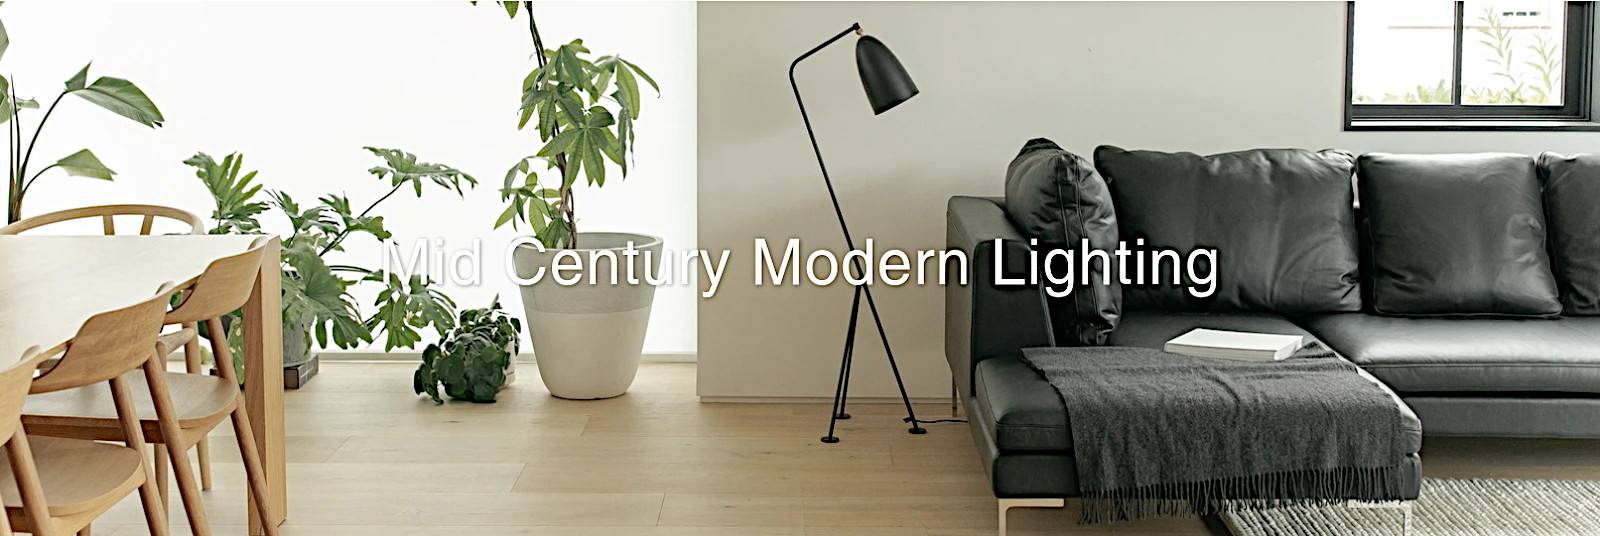 mid century modern lighting low-cost